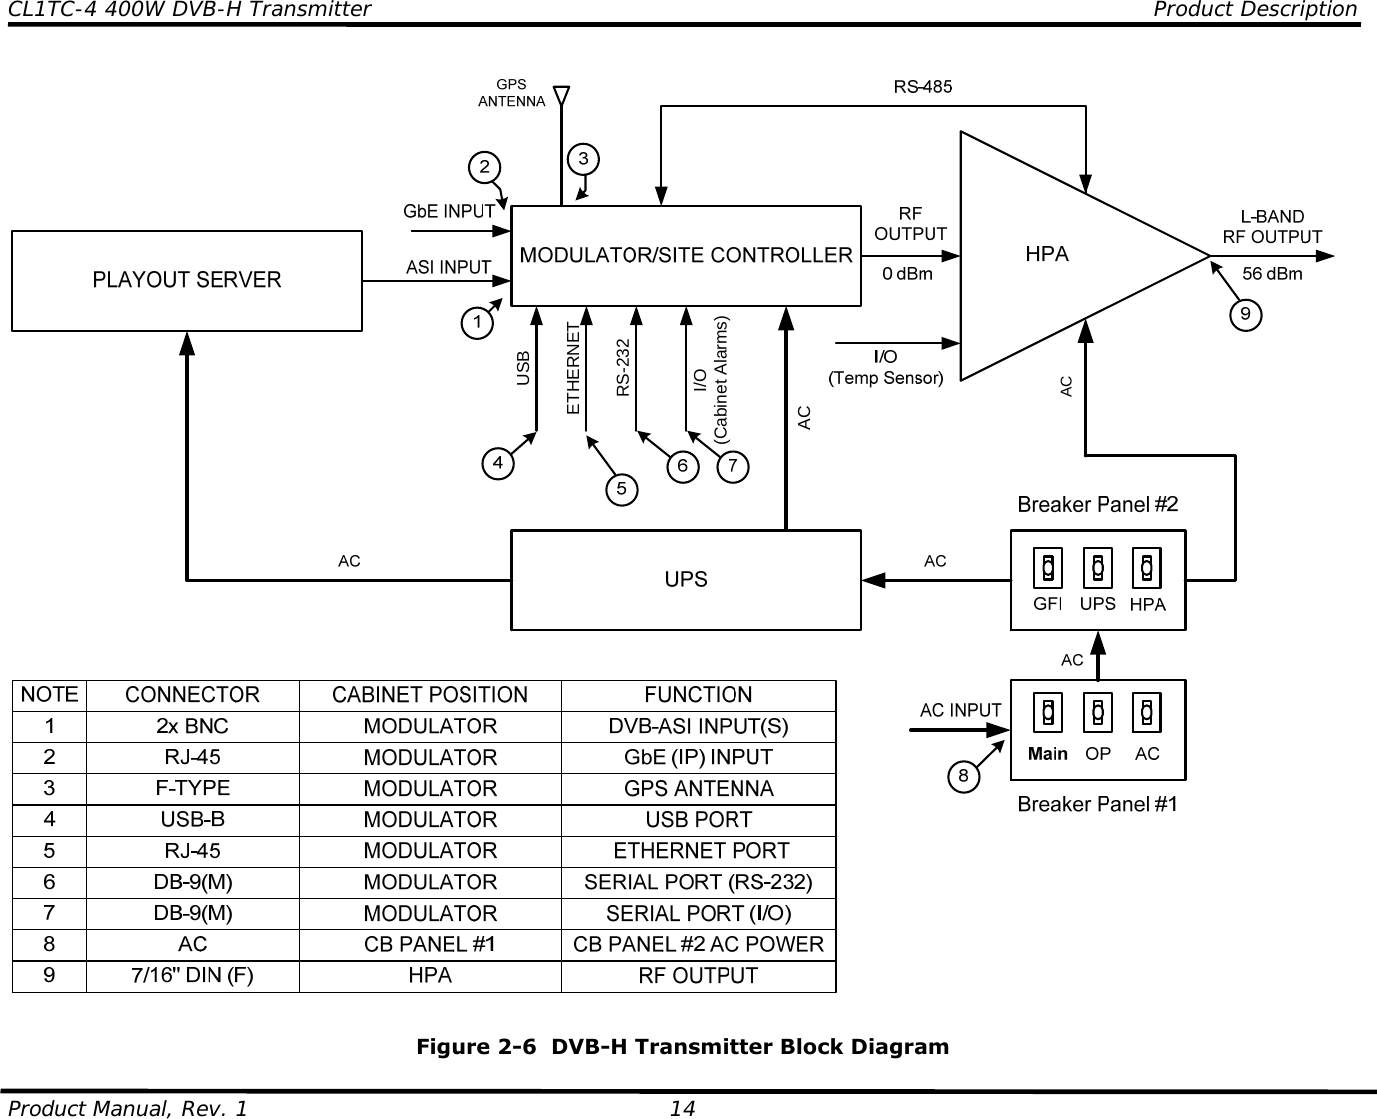 CL1TC-4 400W DVB-H Transmitter    Product Description  Product Manual, Rev. 1  14 ACACUSBETHERNETRS-232I/O(Cabinet Alarms)  Figure 2-6  DVB-H Transmitter Block Diagram 